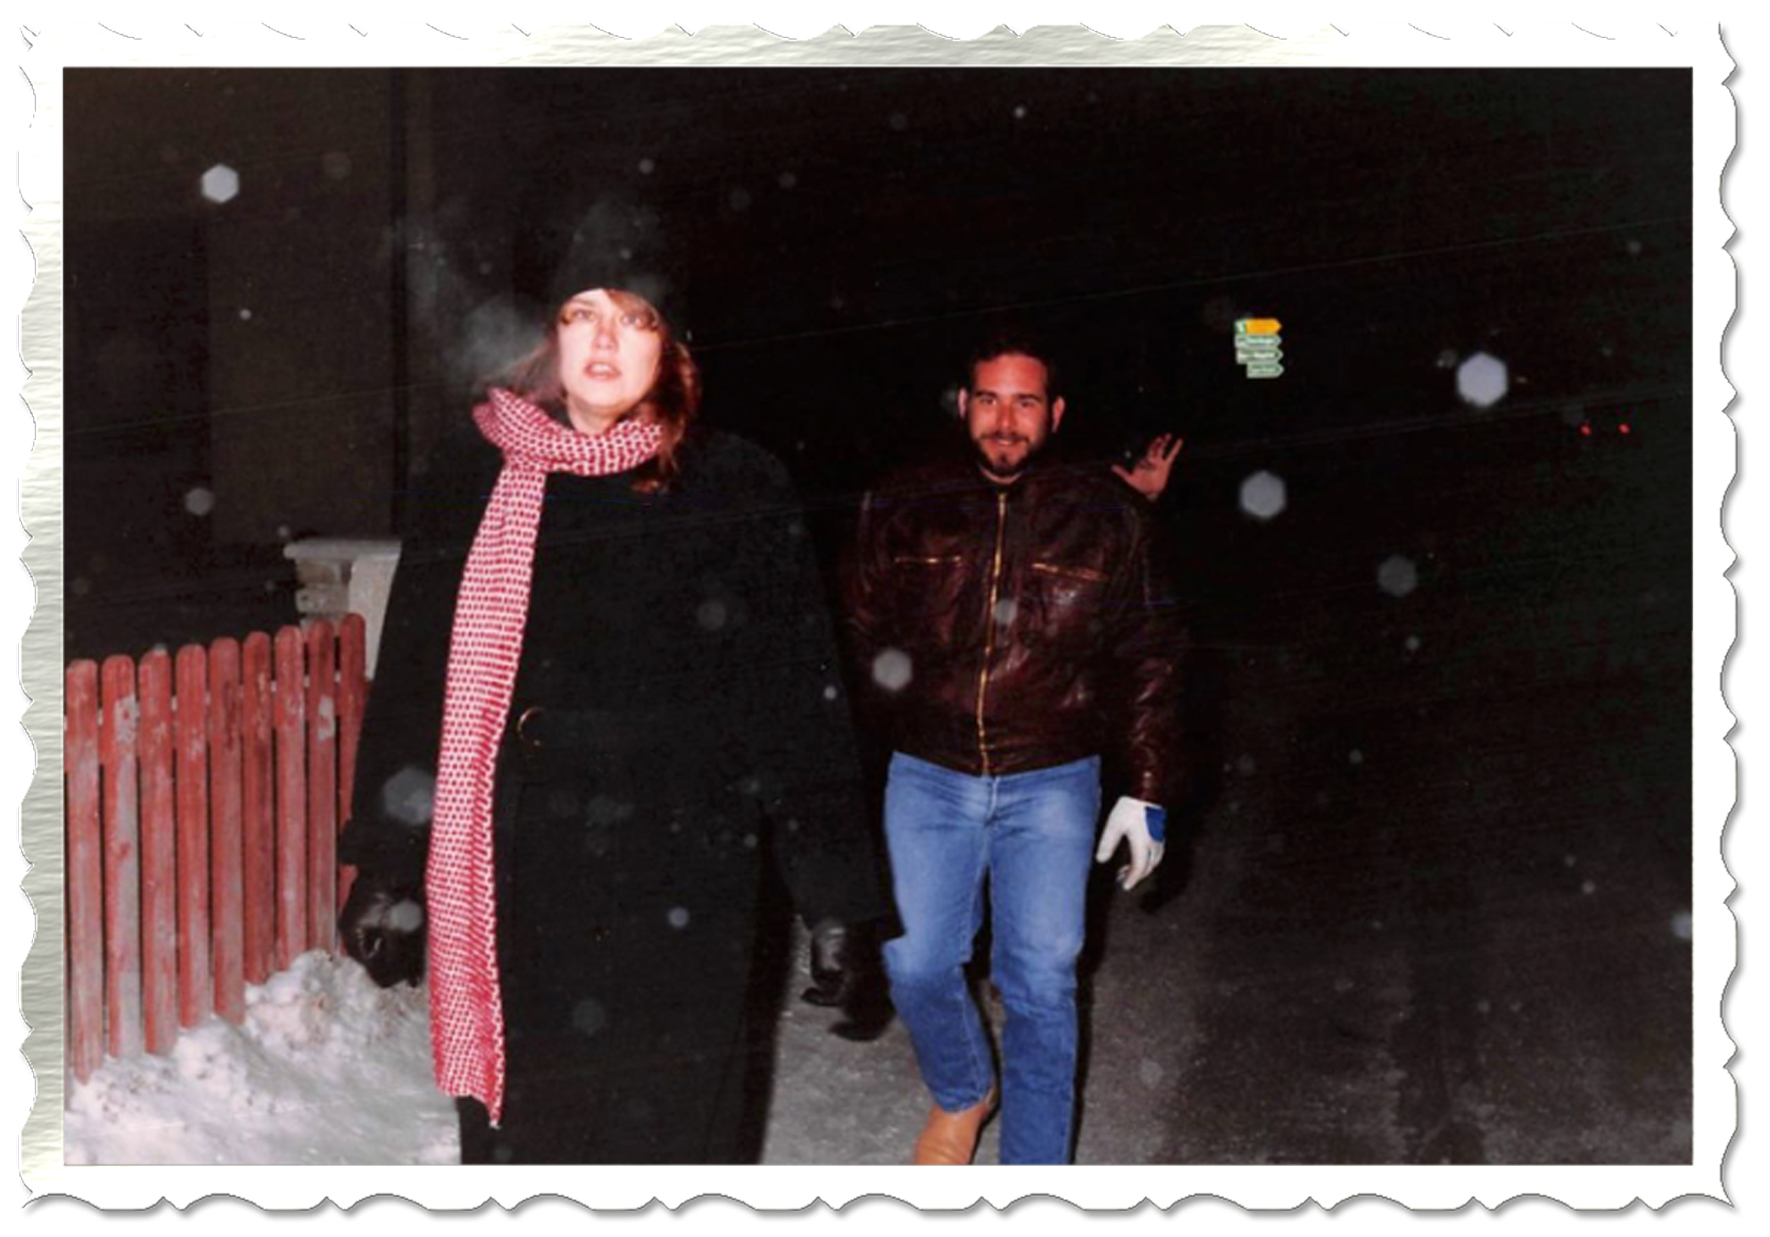 Me (Jim McCann behind) freezing in Munich